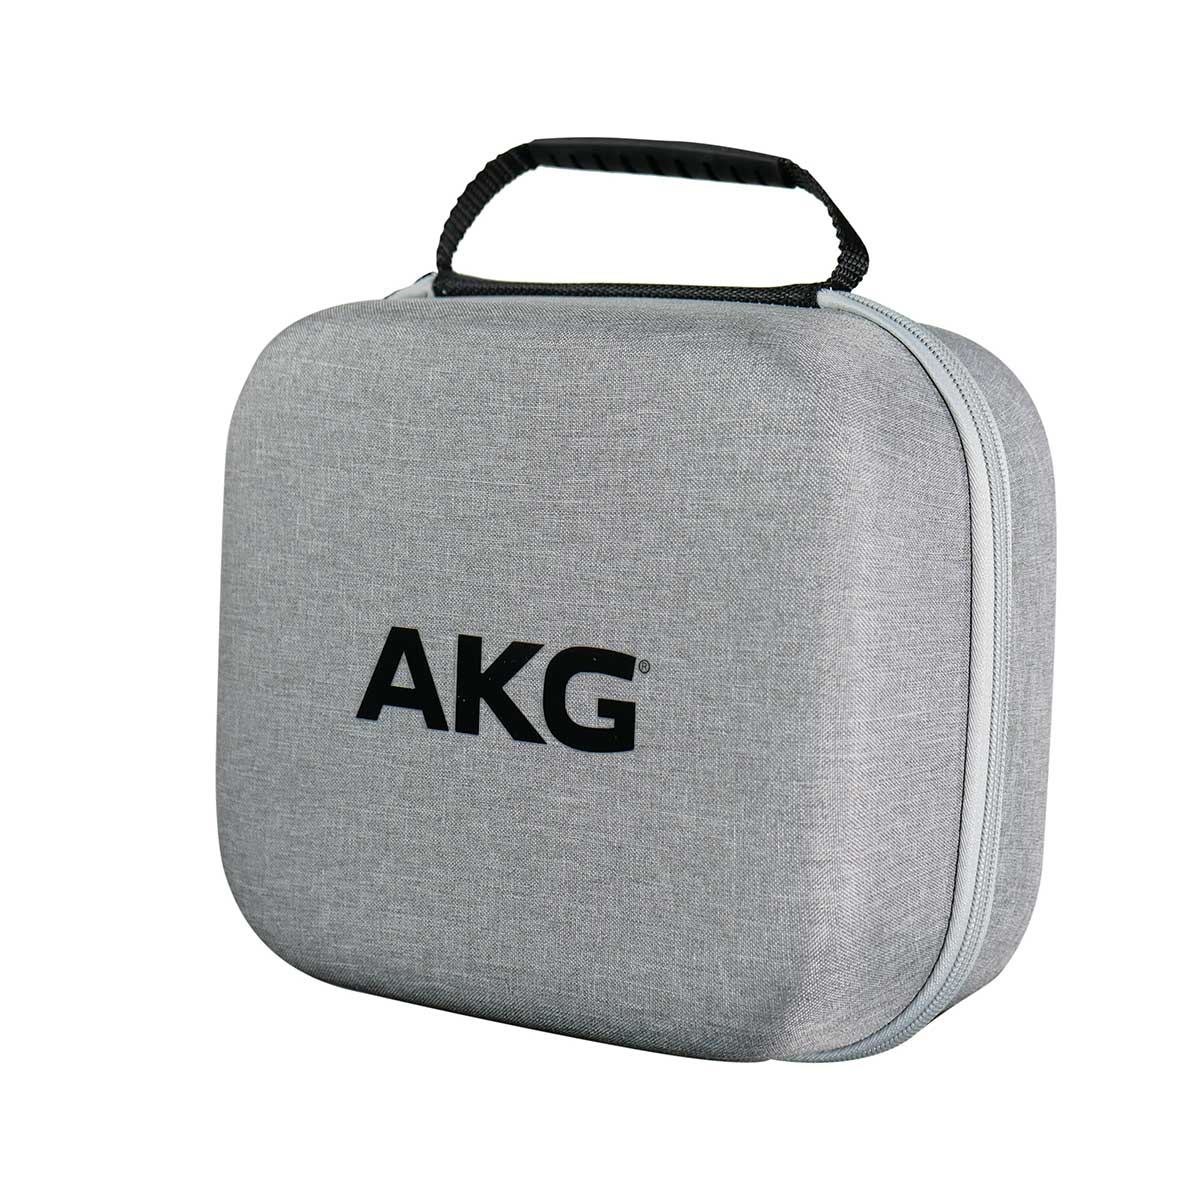 AKG Headphone Carry Case